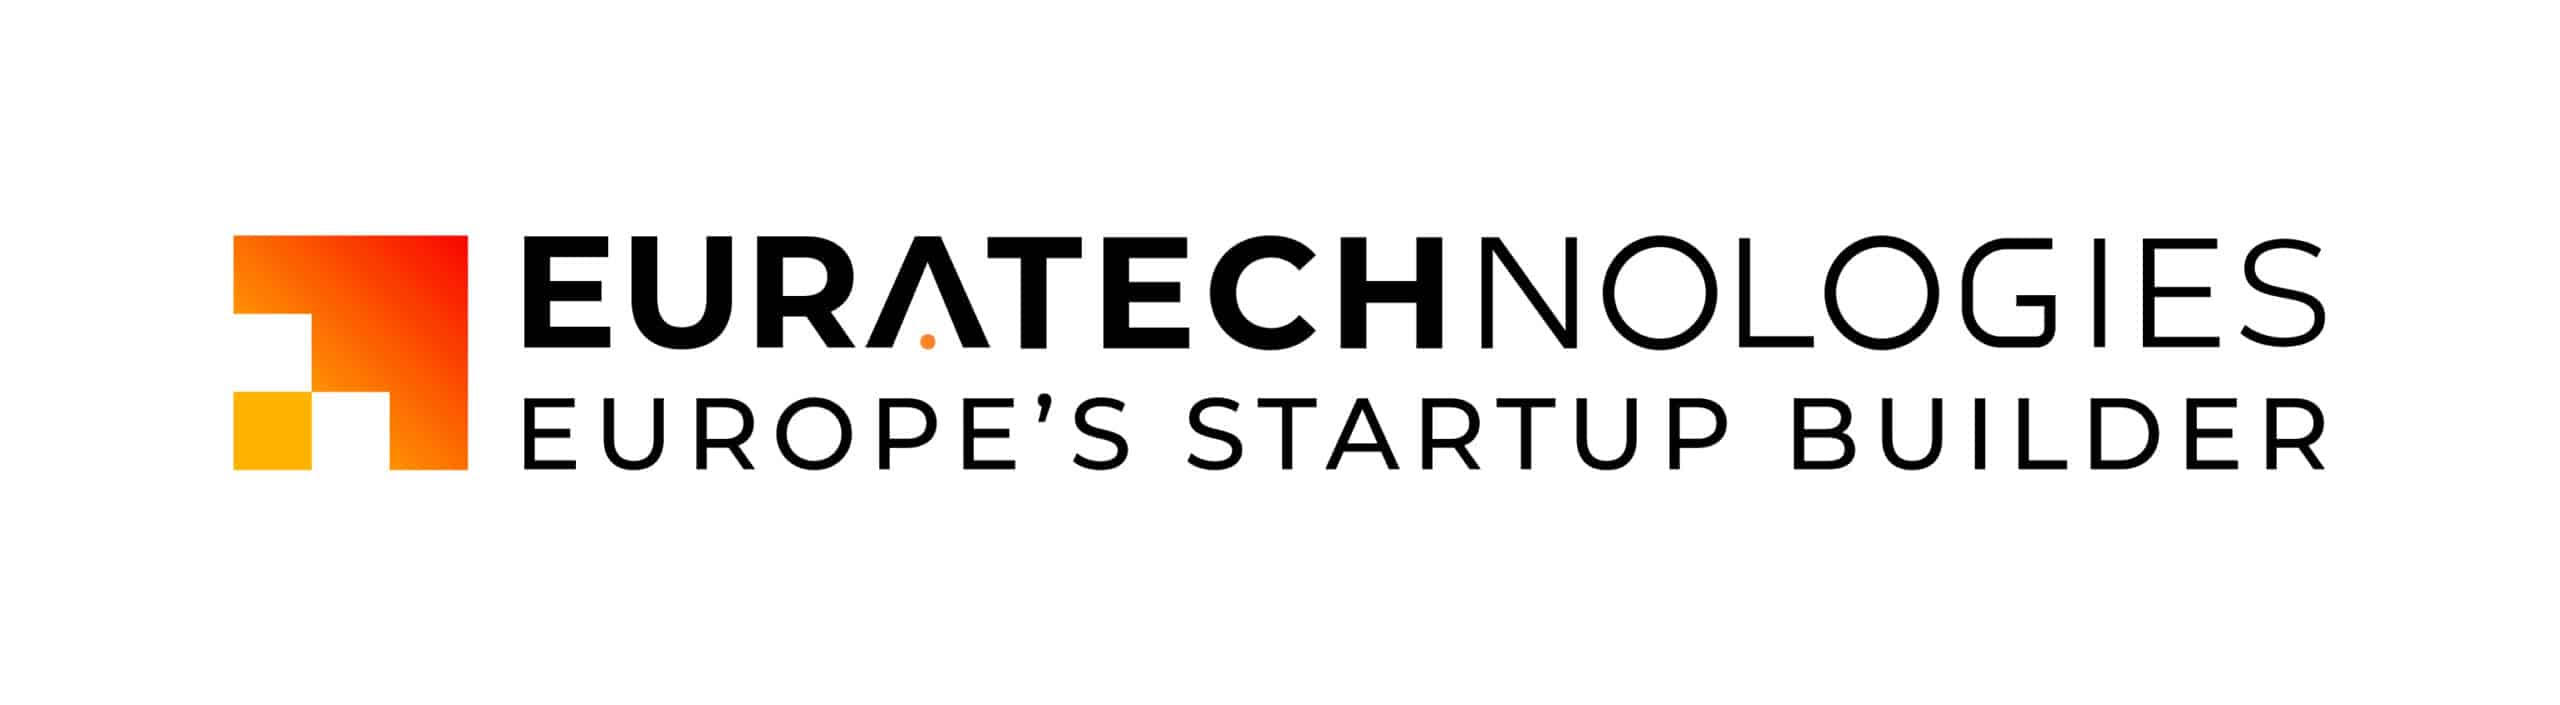 Euratechnologies logo